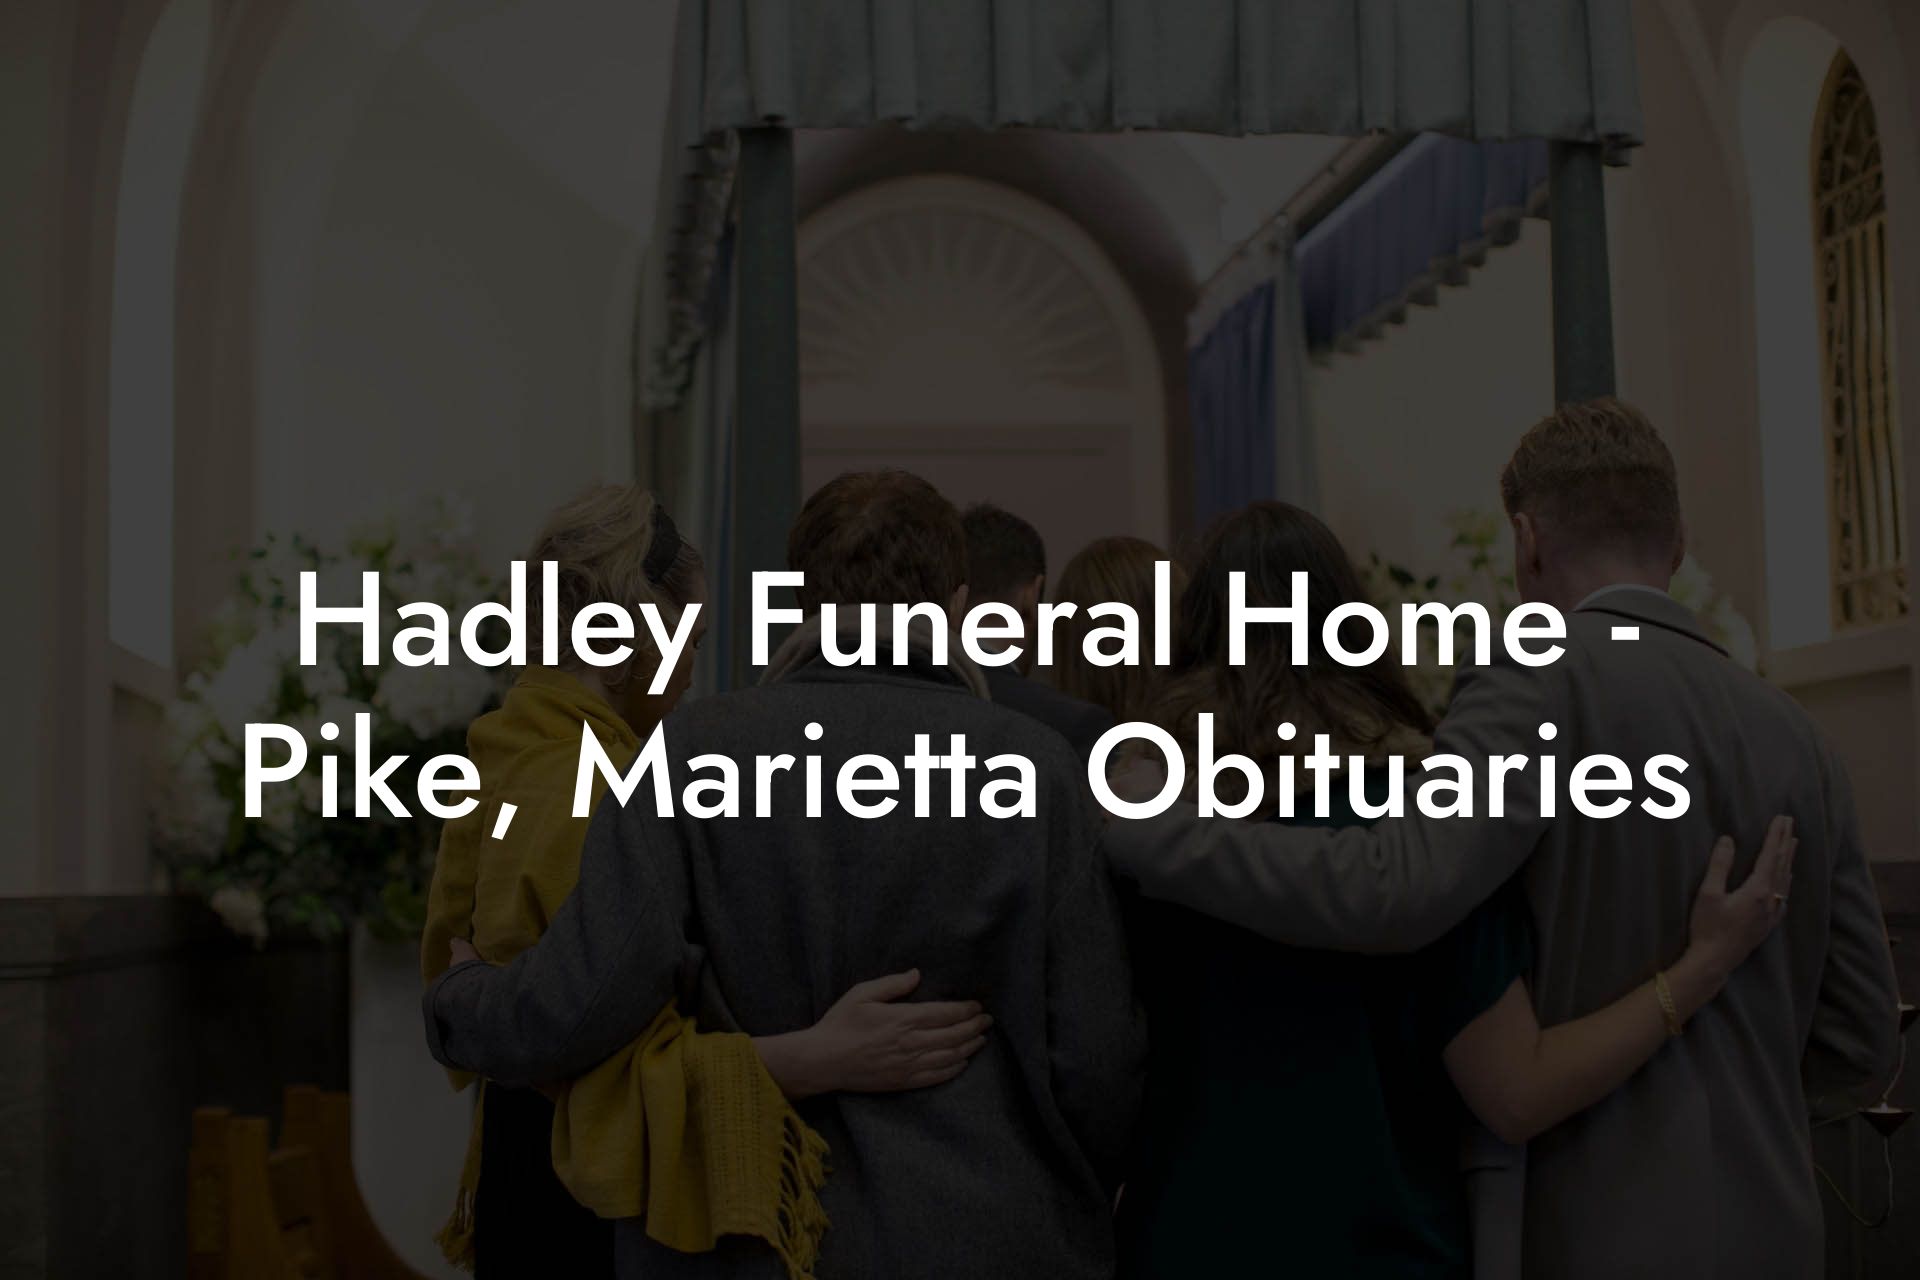 Hadley Funeral Home - Pike, Marietta Obituaries